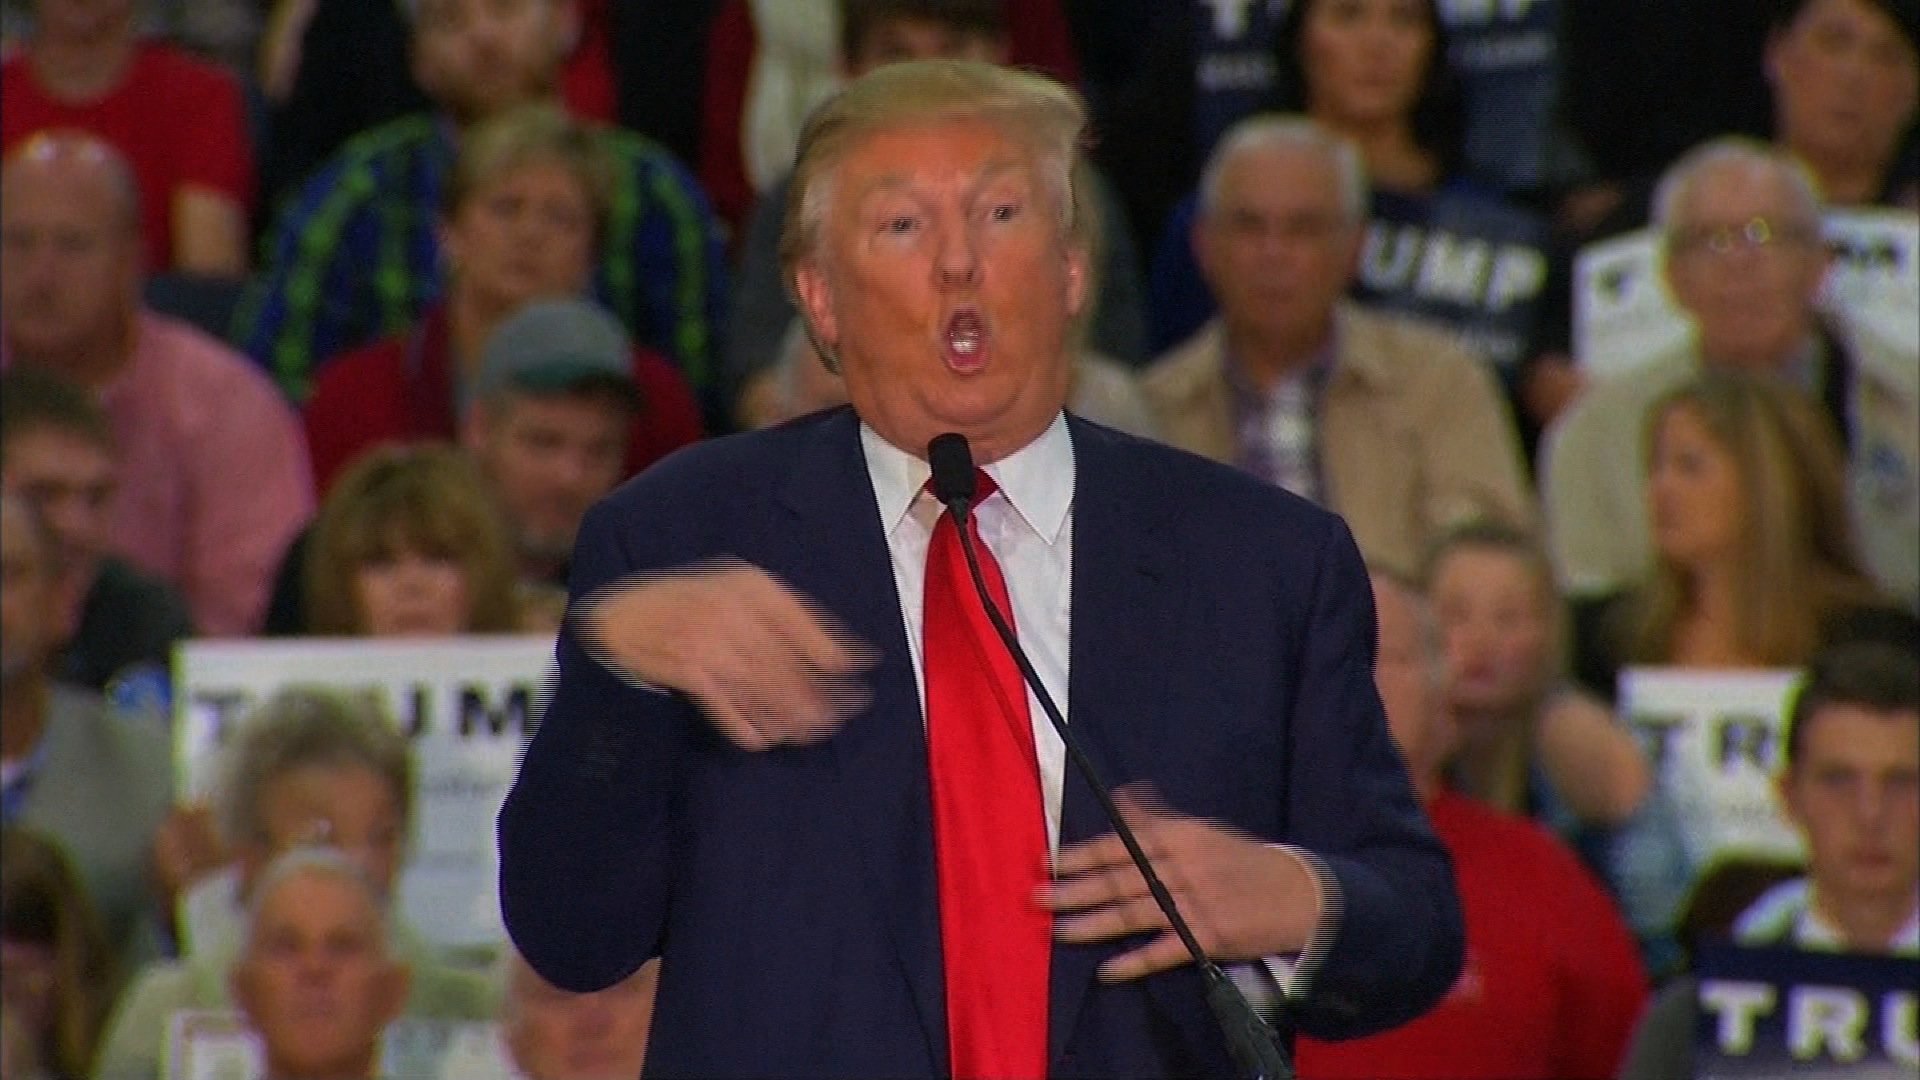 Trump mocks reporter's disability